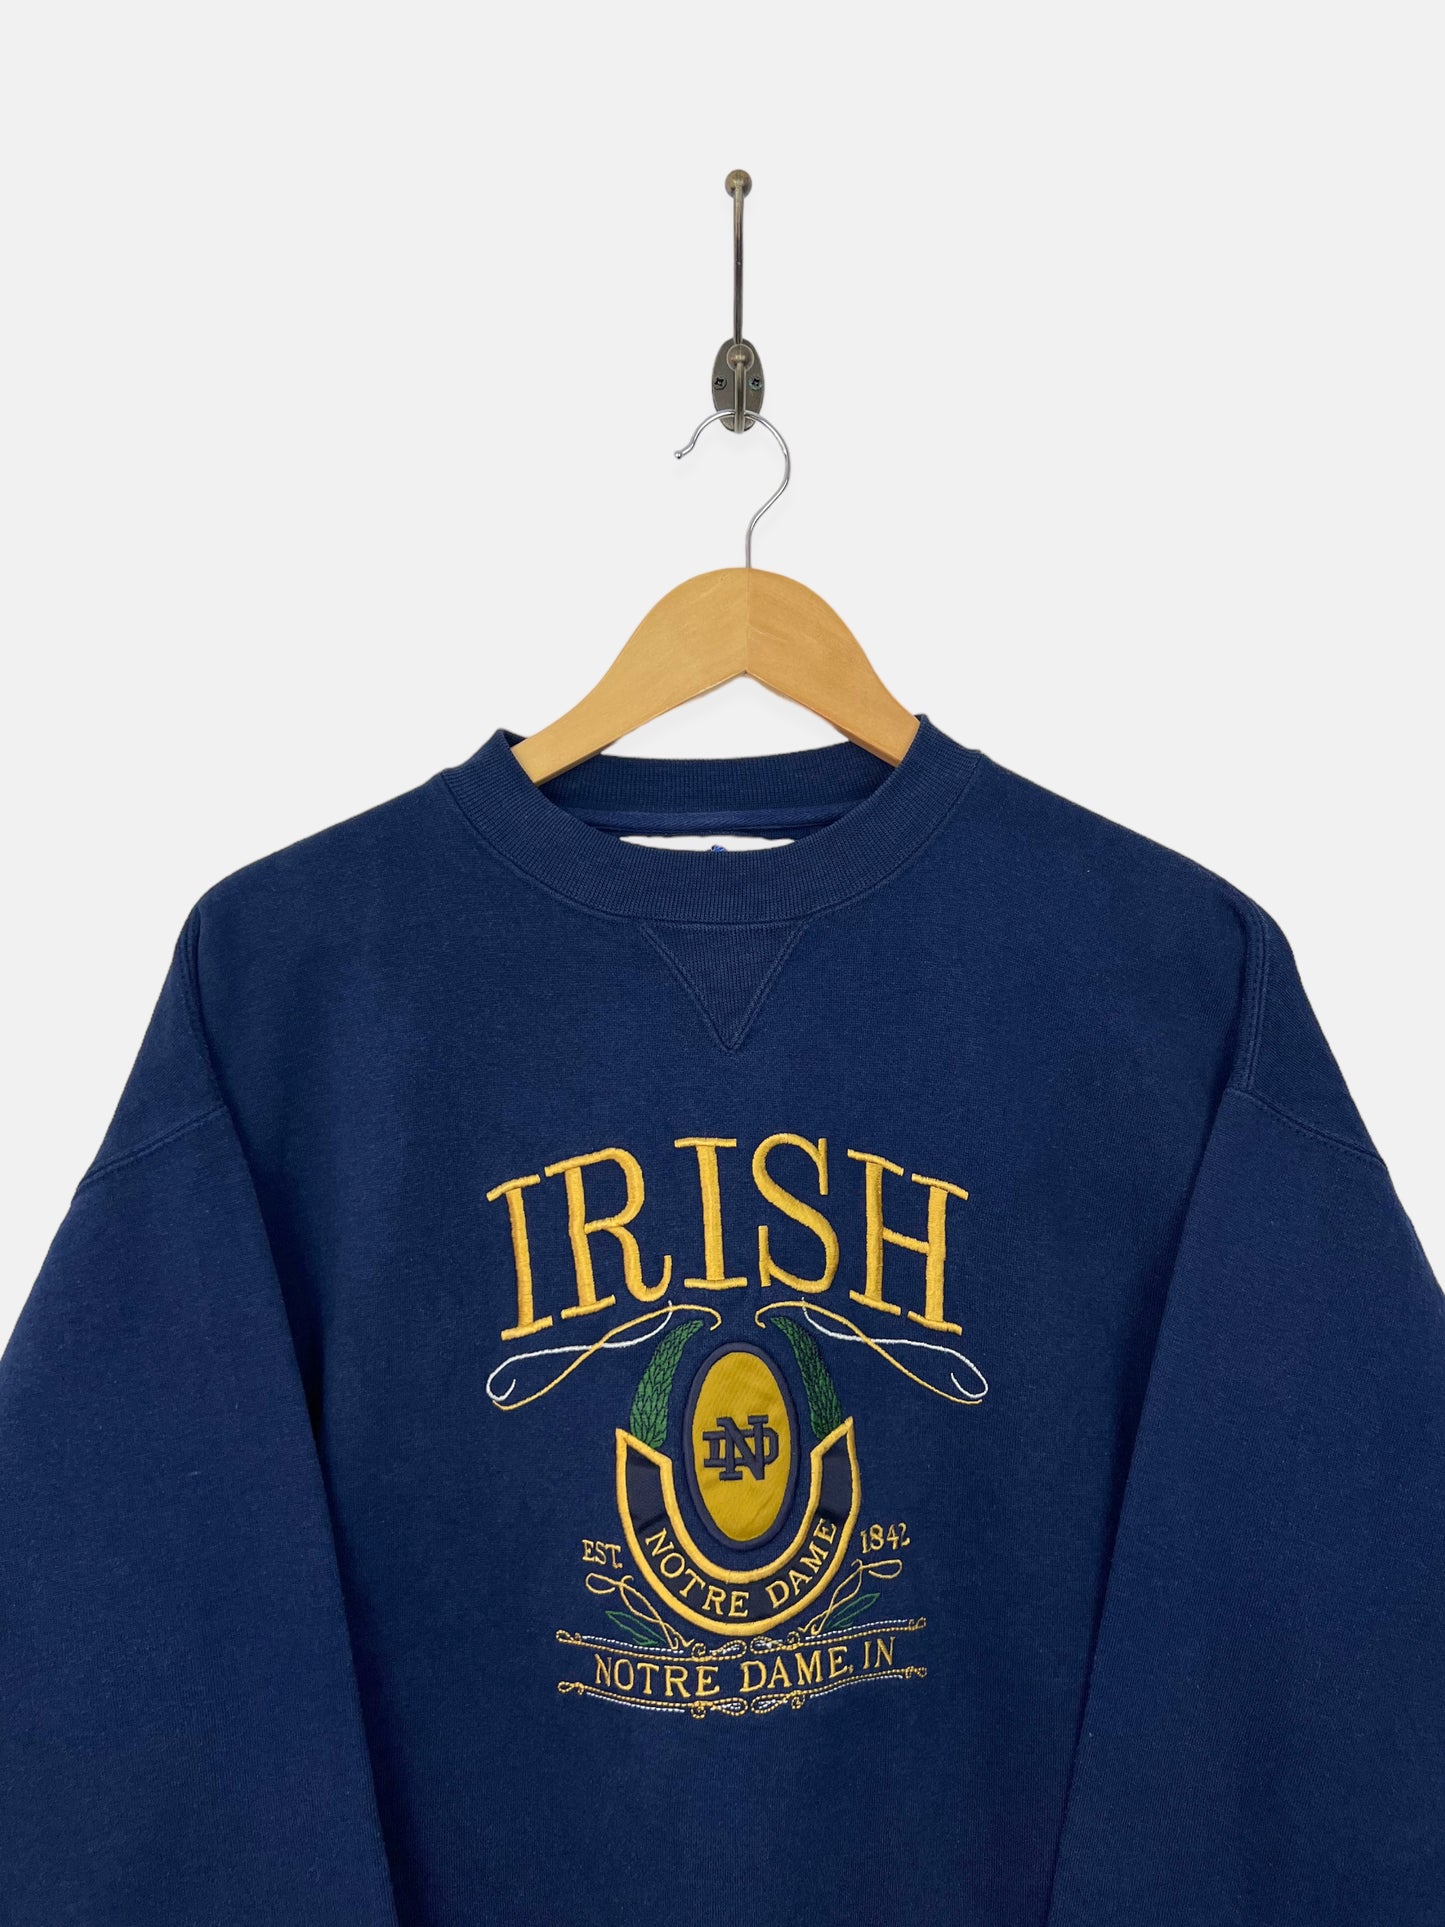 90's Notre Dame University Embroidered Vintage Sweatshirt Size 12